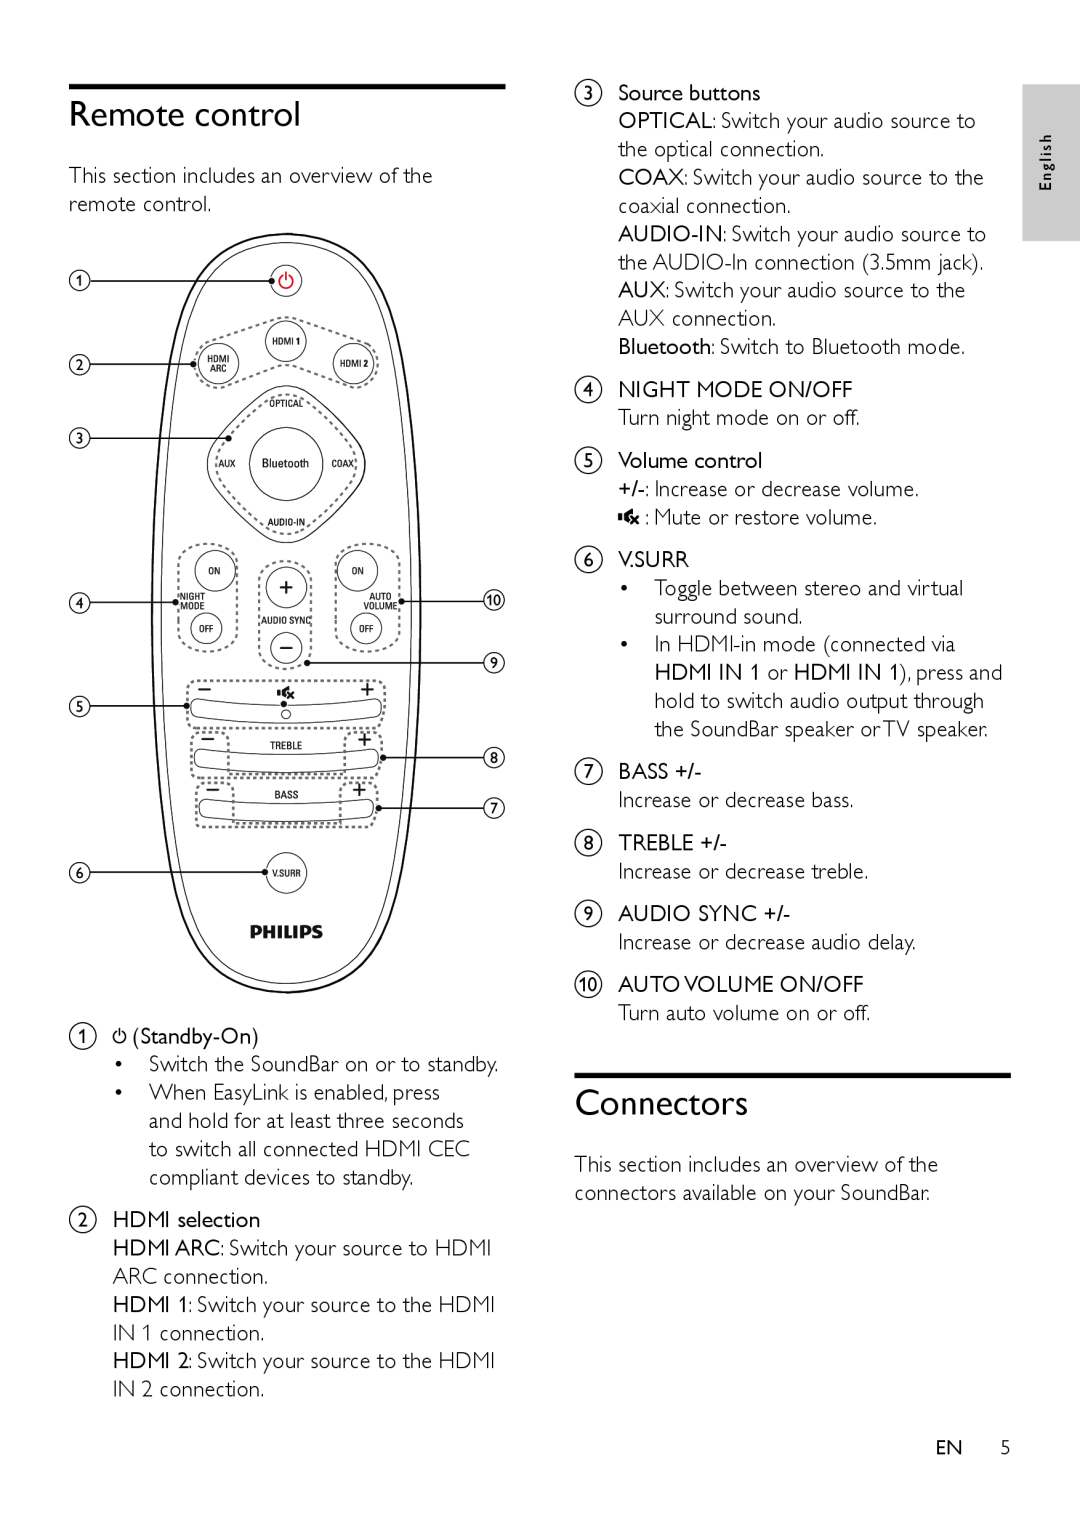 Philips HTL9100 user manual Remote control, Connectors 